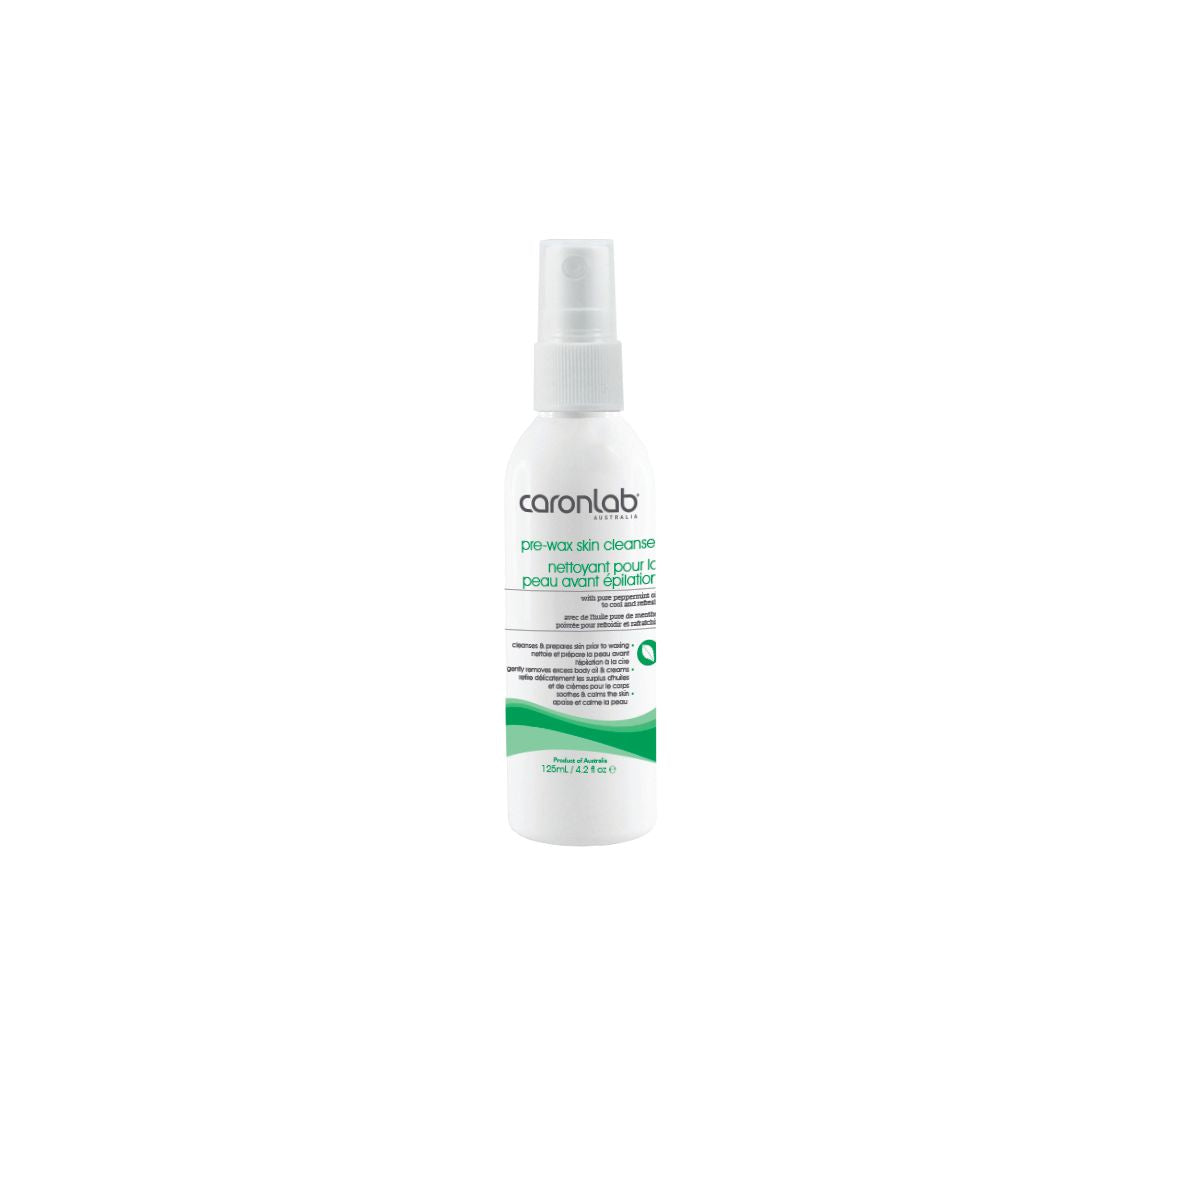 Caronlab Pre-Wax Skin Cleanser with Mist Spray 125ml